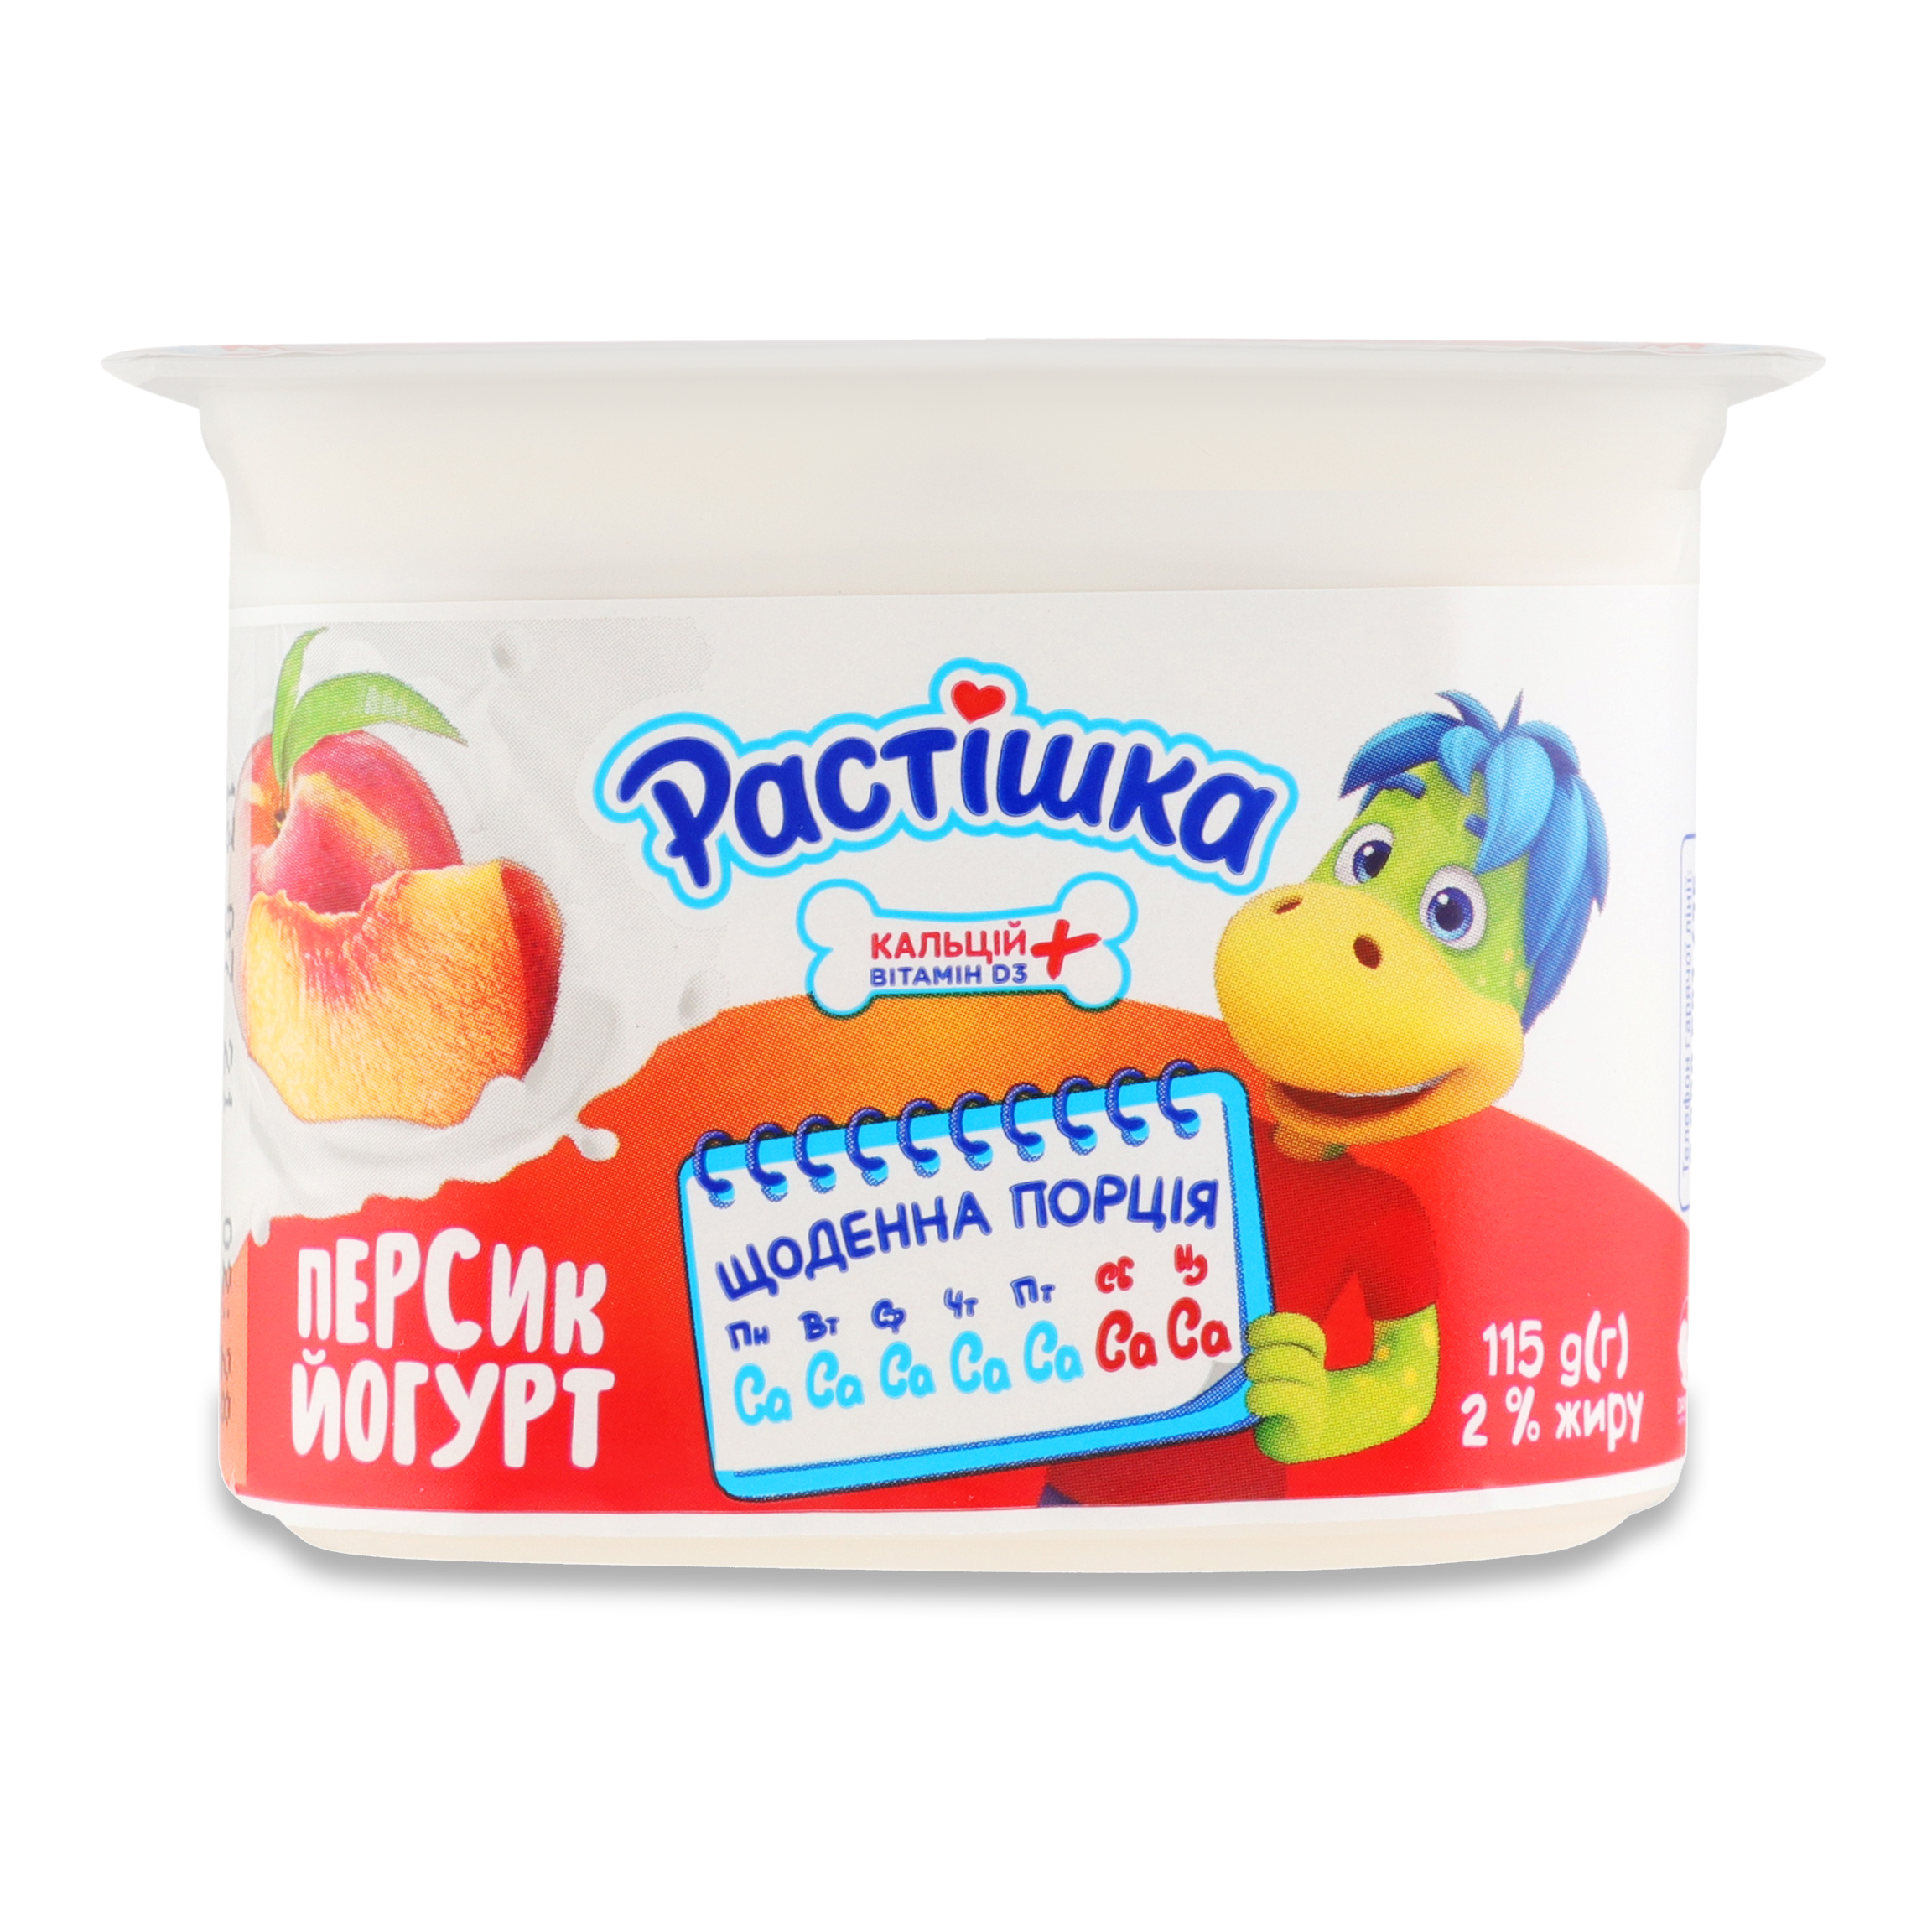 Yogurt Rastyshka with fruit filling peach 2%